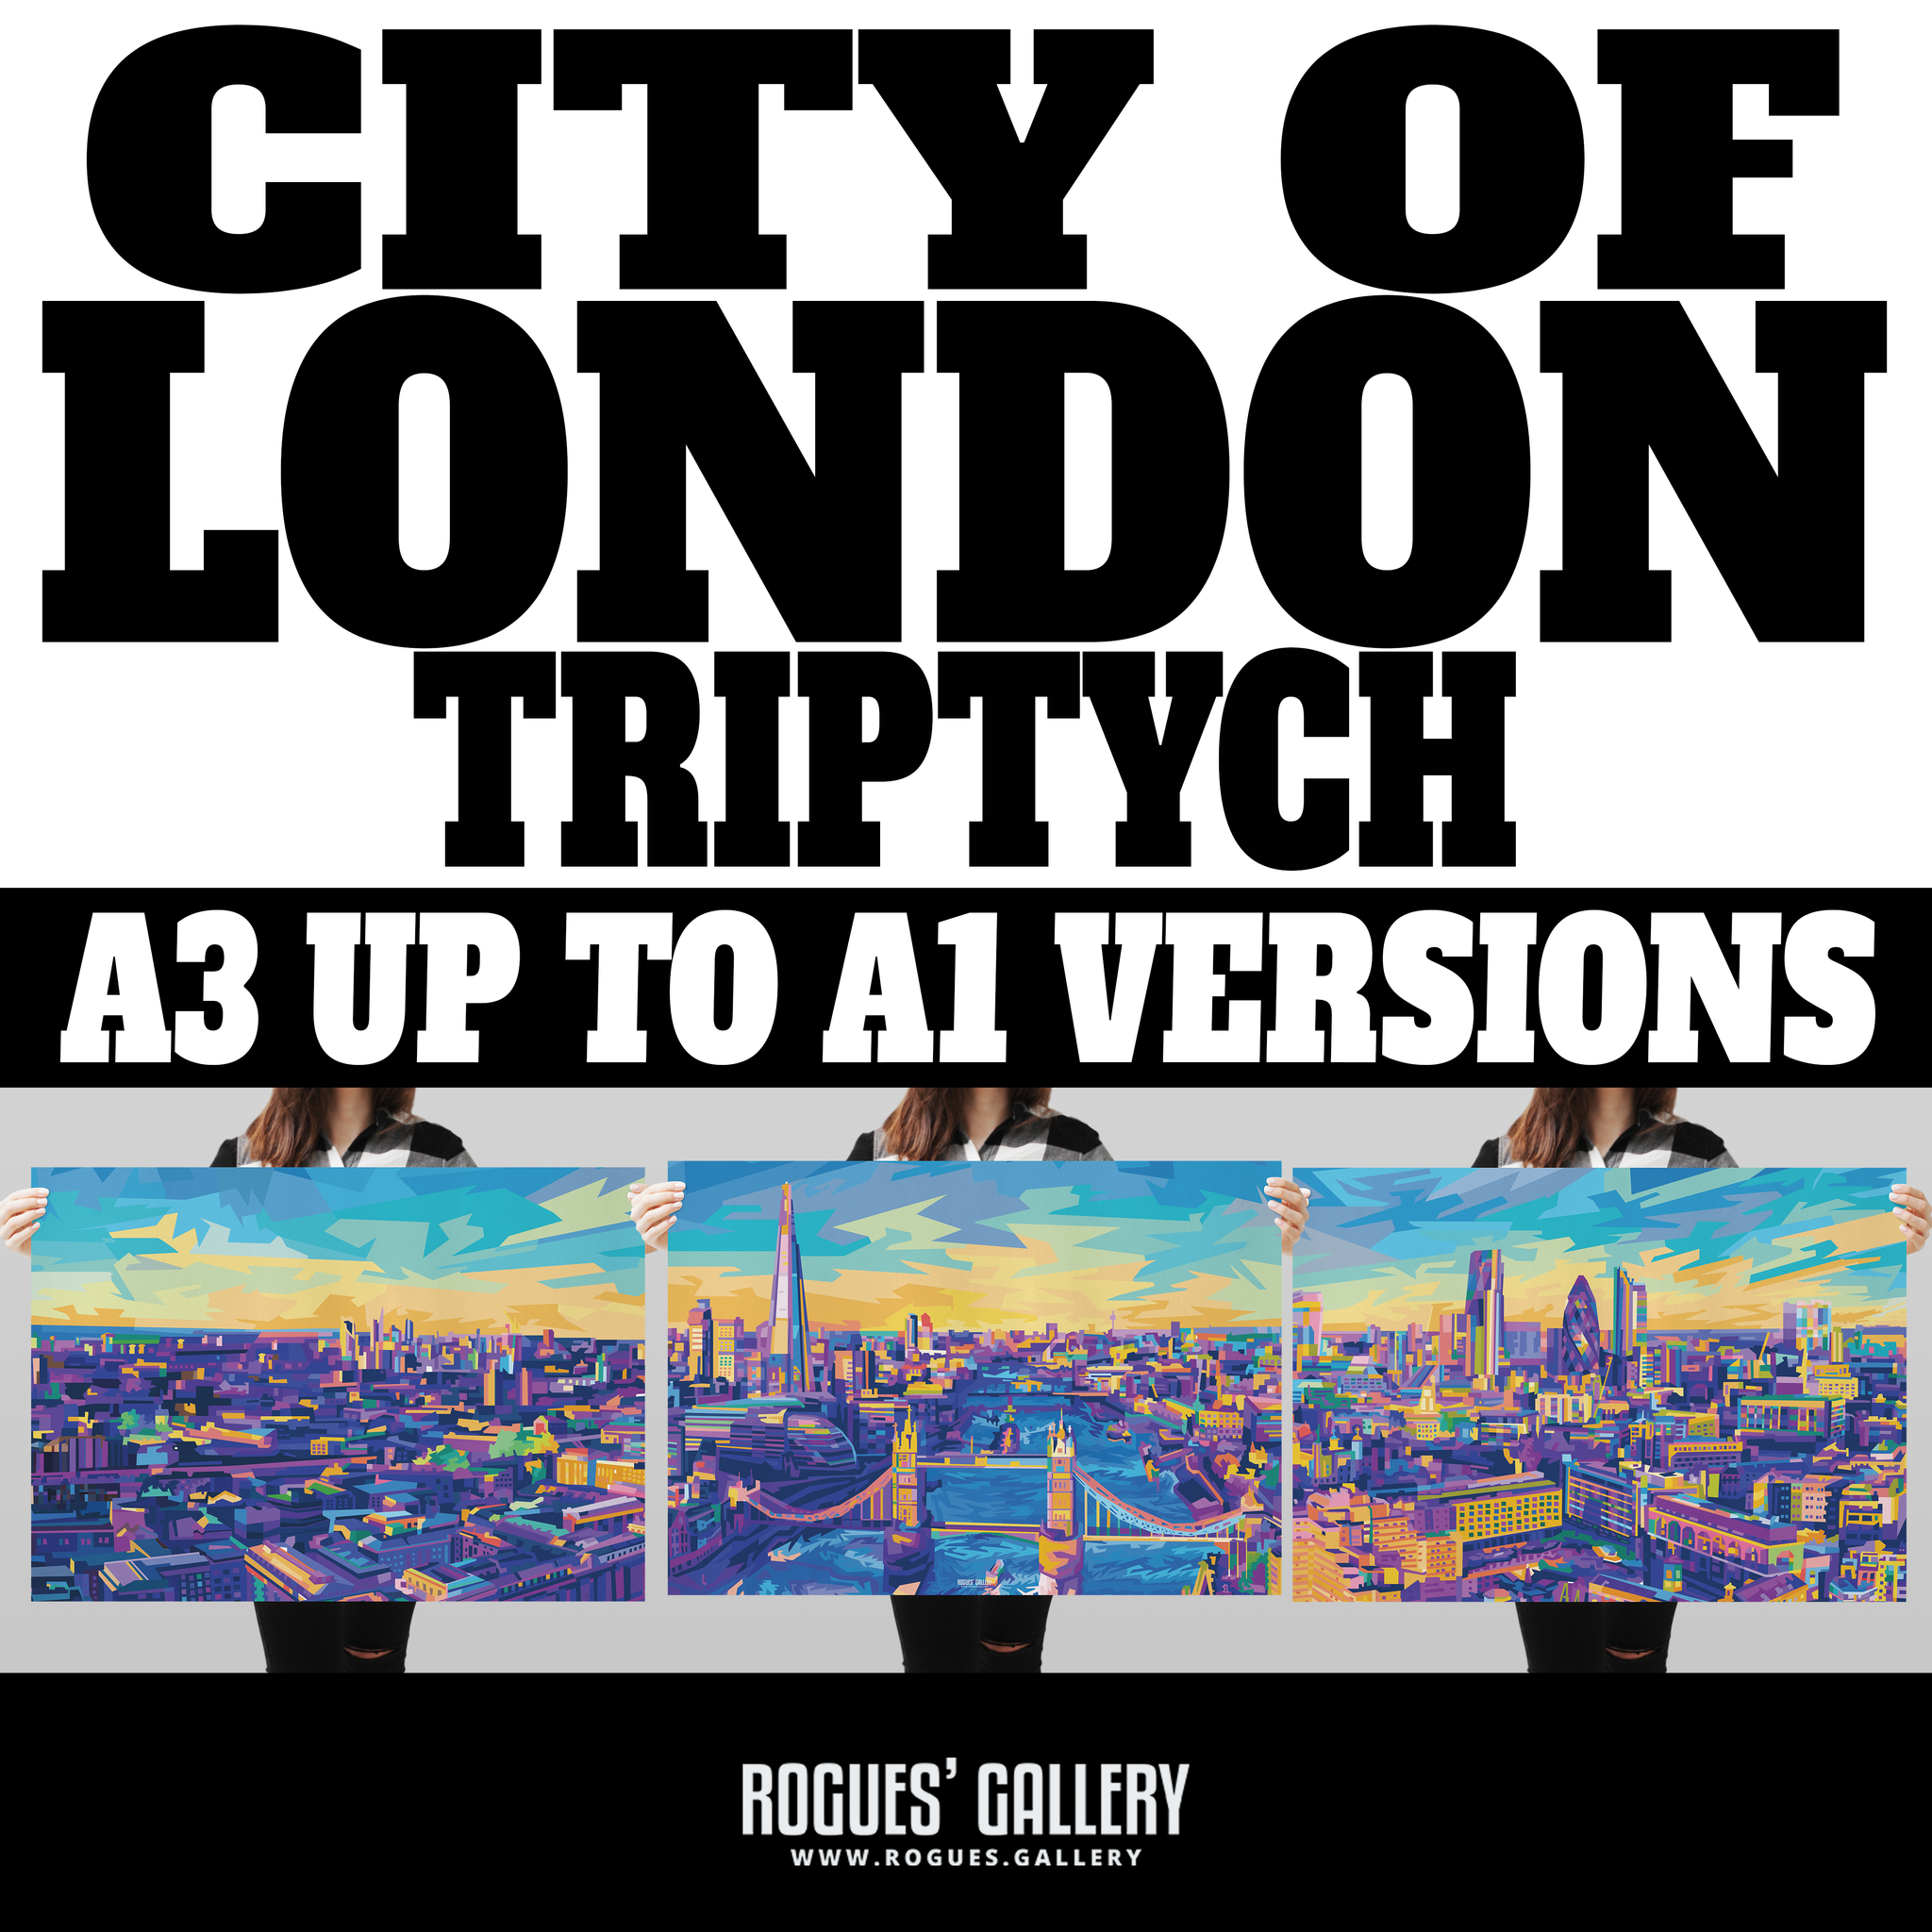 City of London modern pop art triptych prints